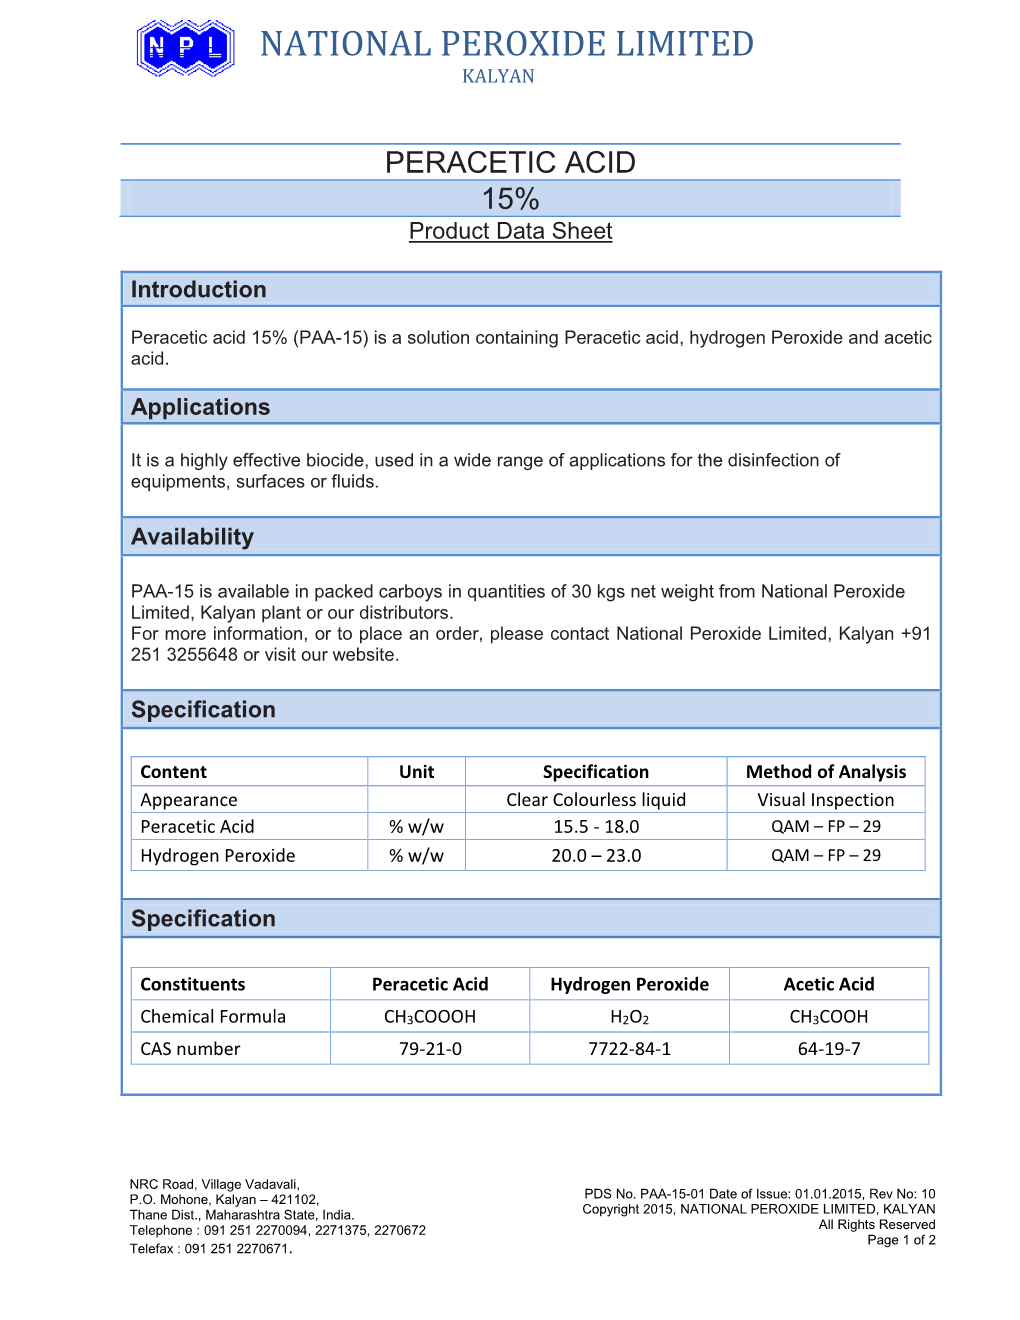 National Peroxide Limited Kalyan